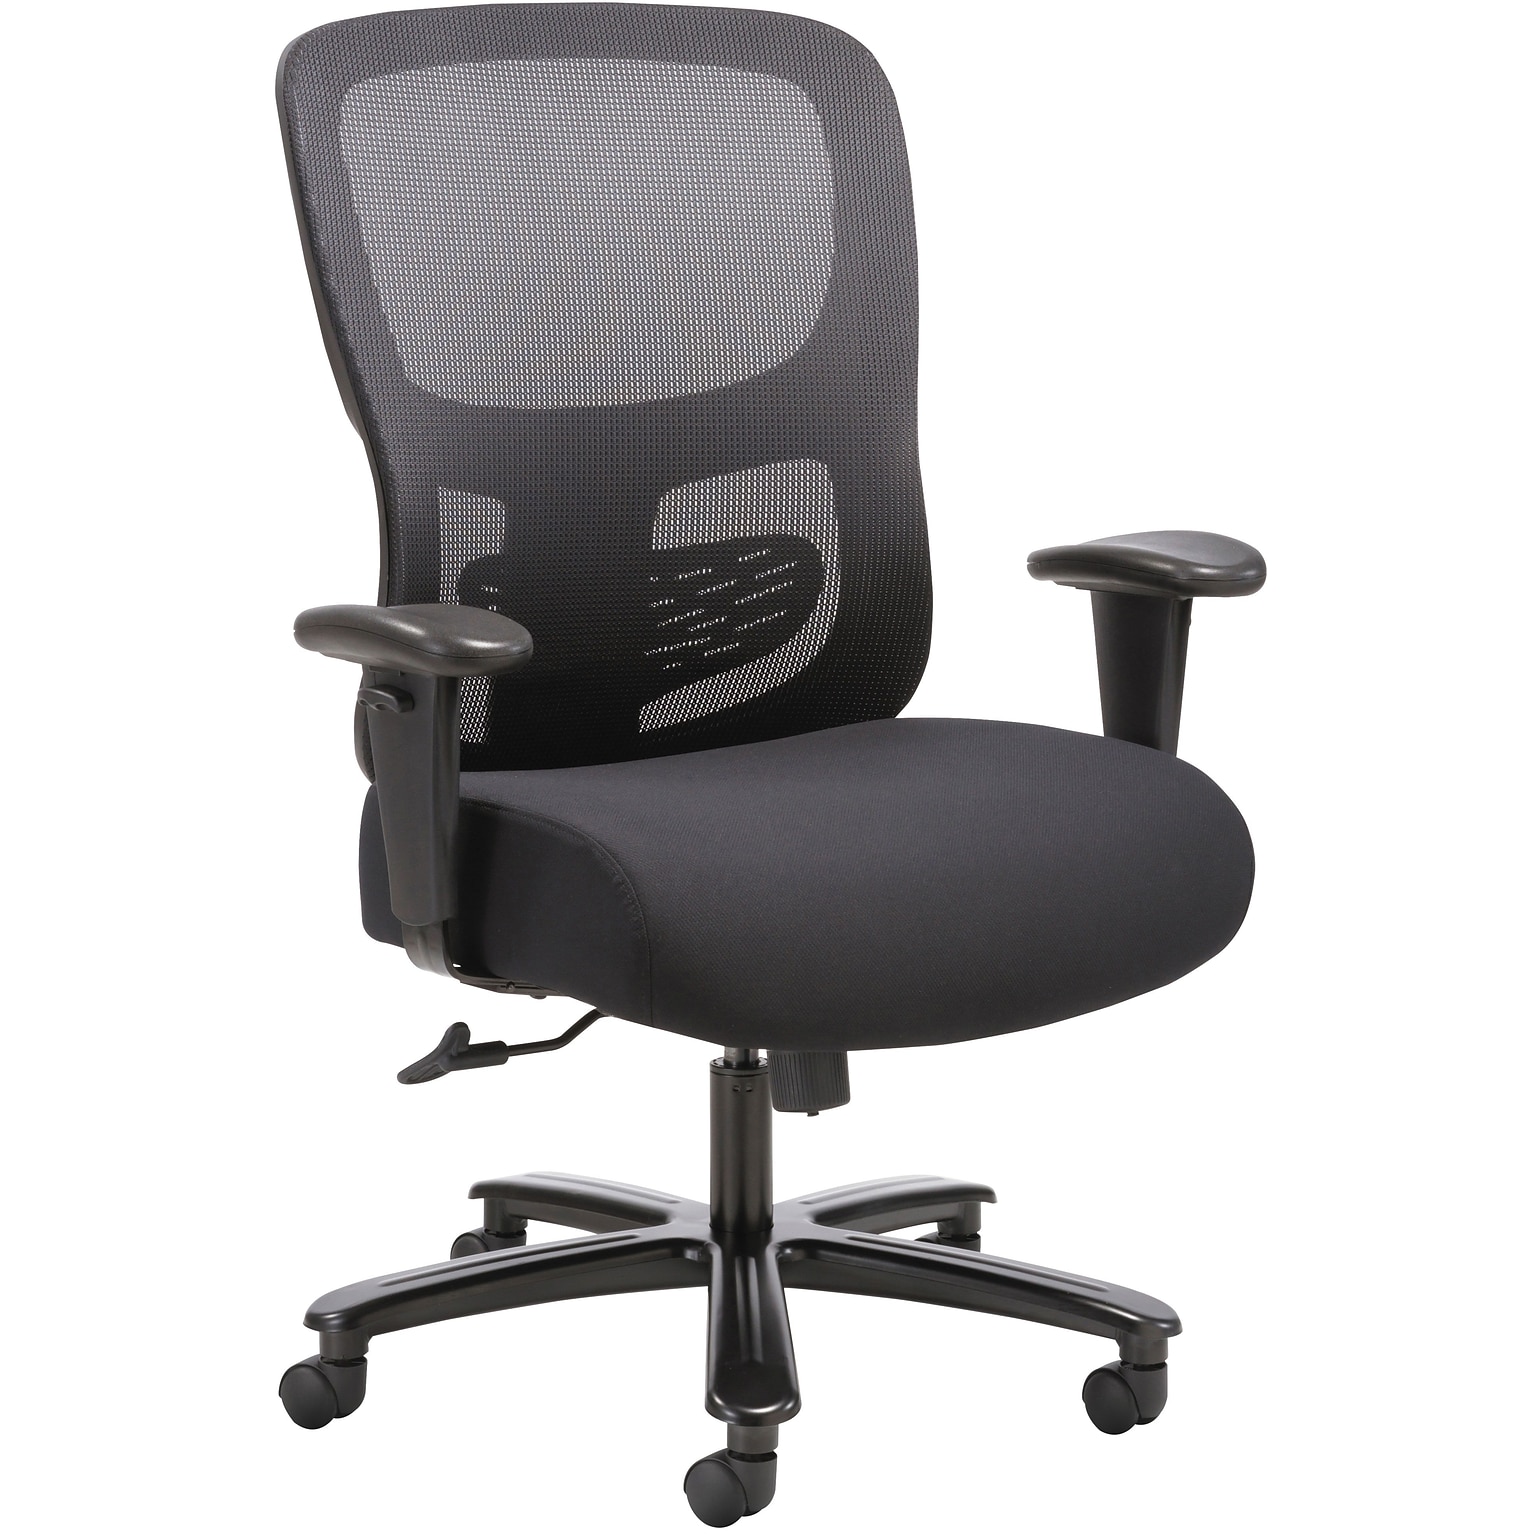 Sadie Big and Tall Chair, Height-Adjustable Arms, Adjustable Lumbar (BSXVST141)